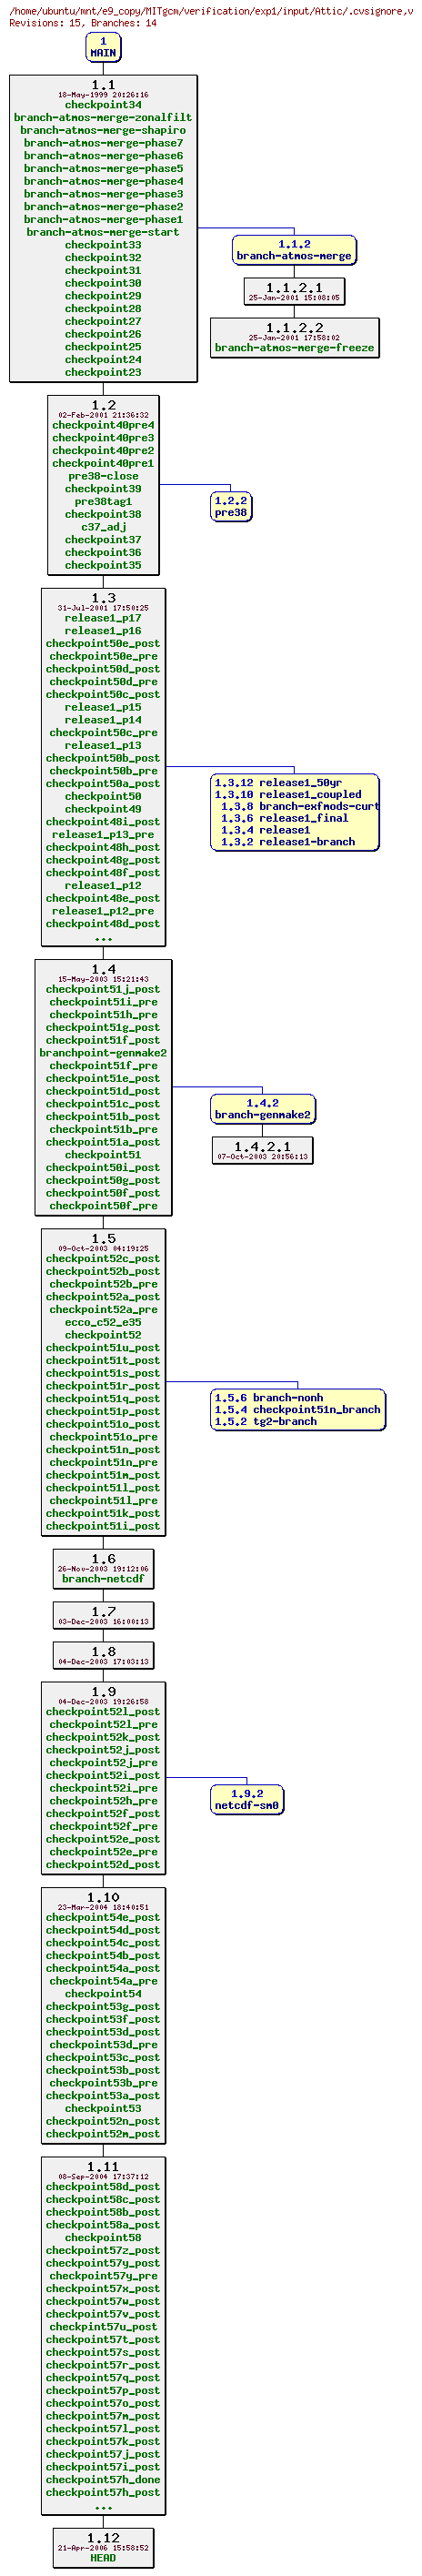 Revisions of MITgcm/verification/exp1/input/.cvsignore